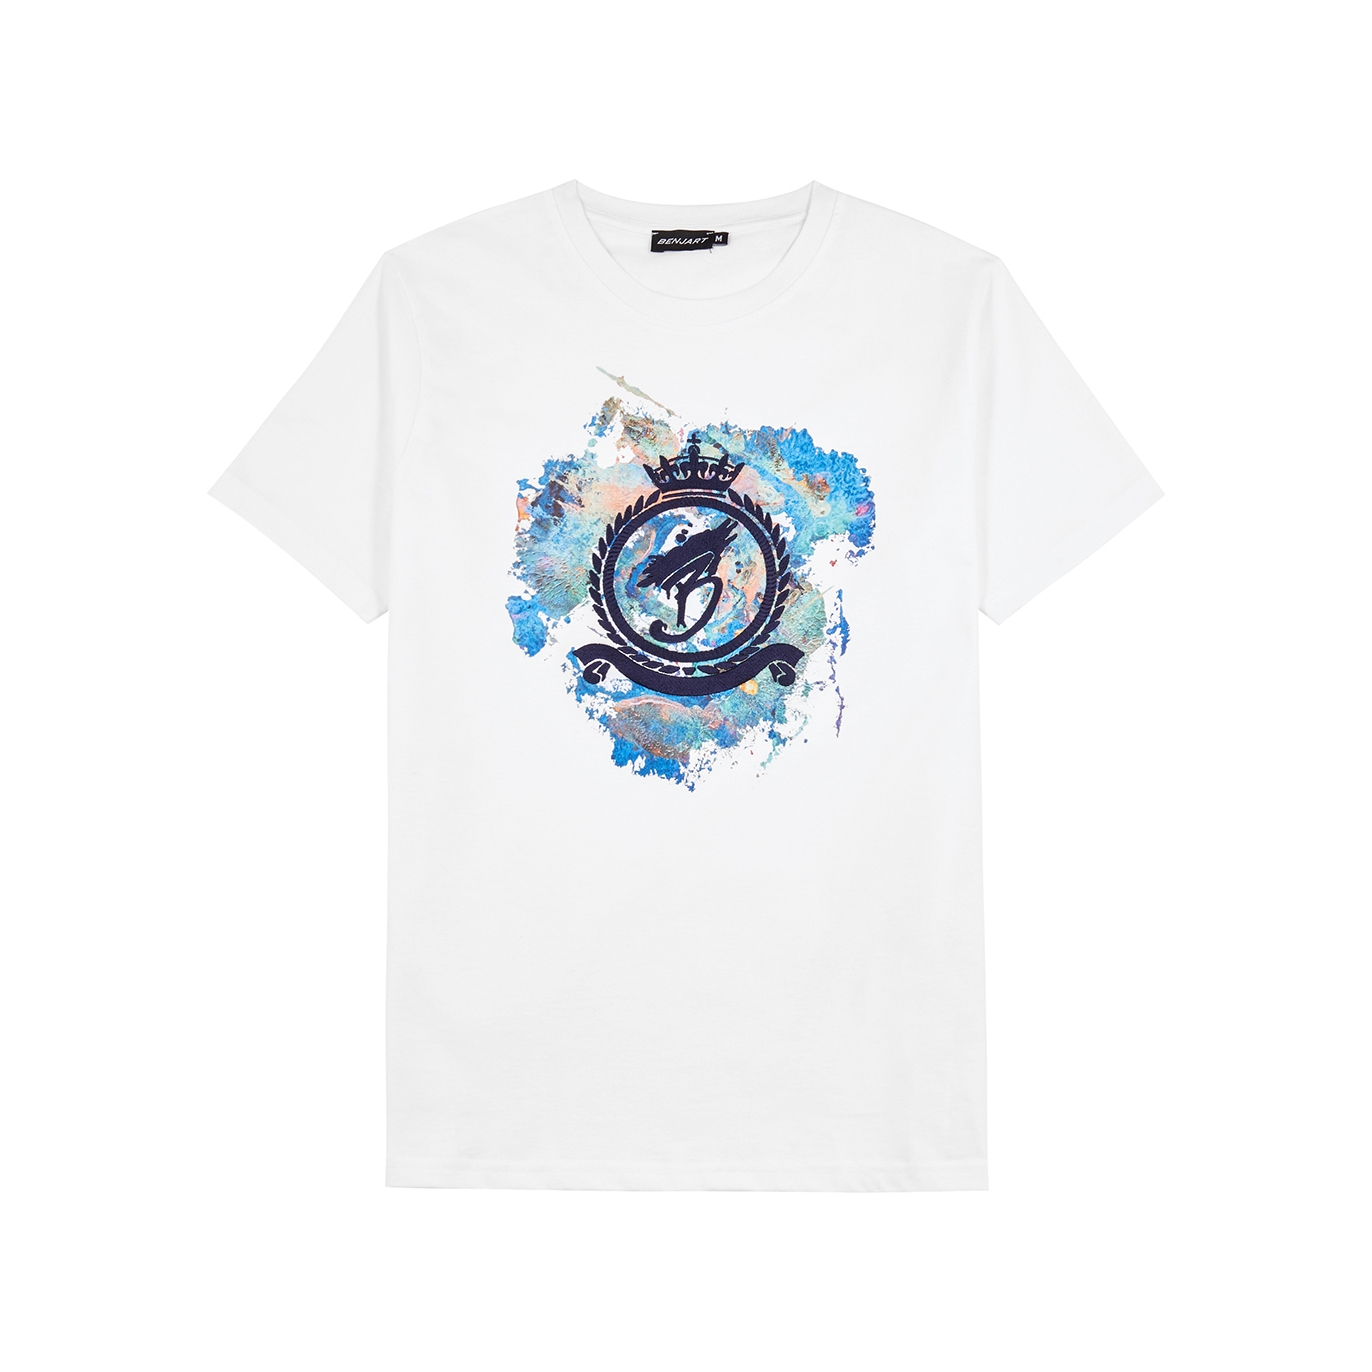 Benjart Emblem Spray Cotton T-shirt - White And Blue - S